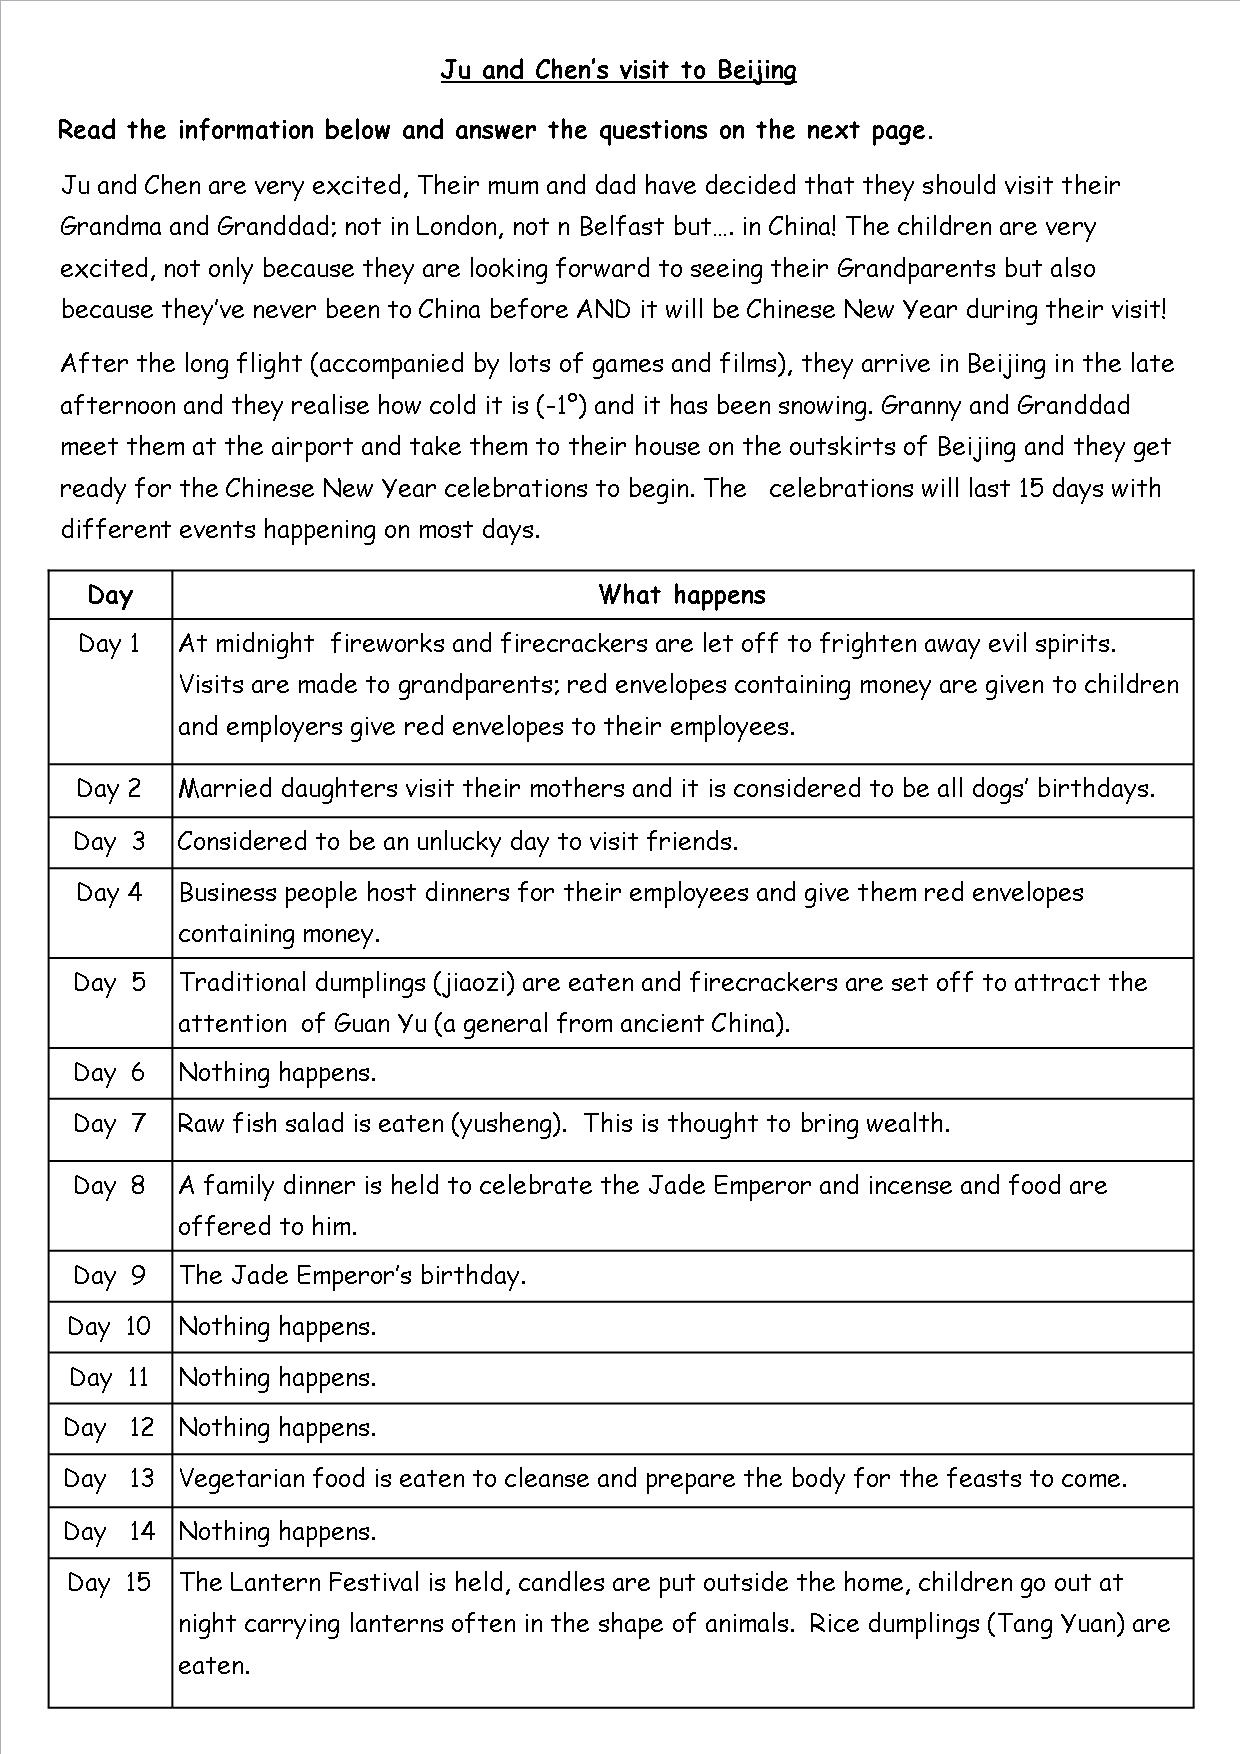 EYFS, KS1, KS2, SEN, Chinese New Year worksheets and activities